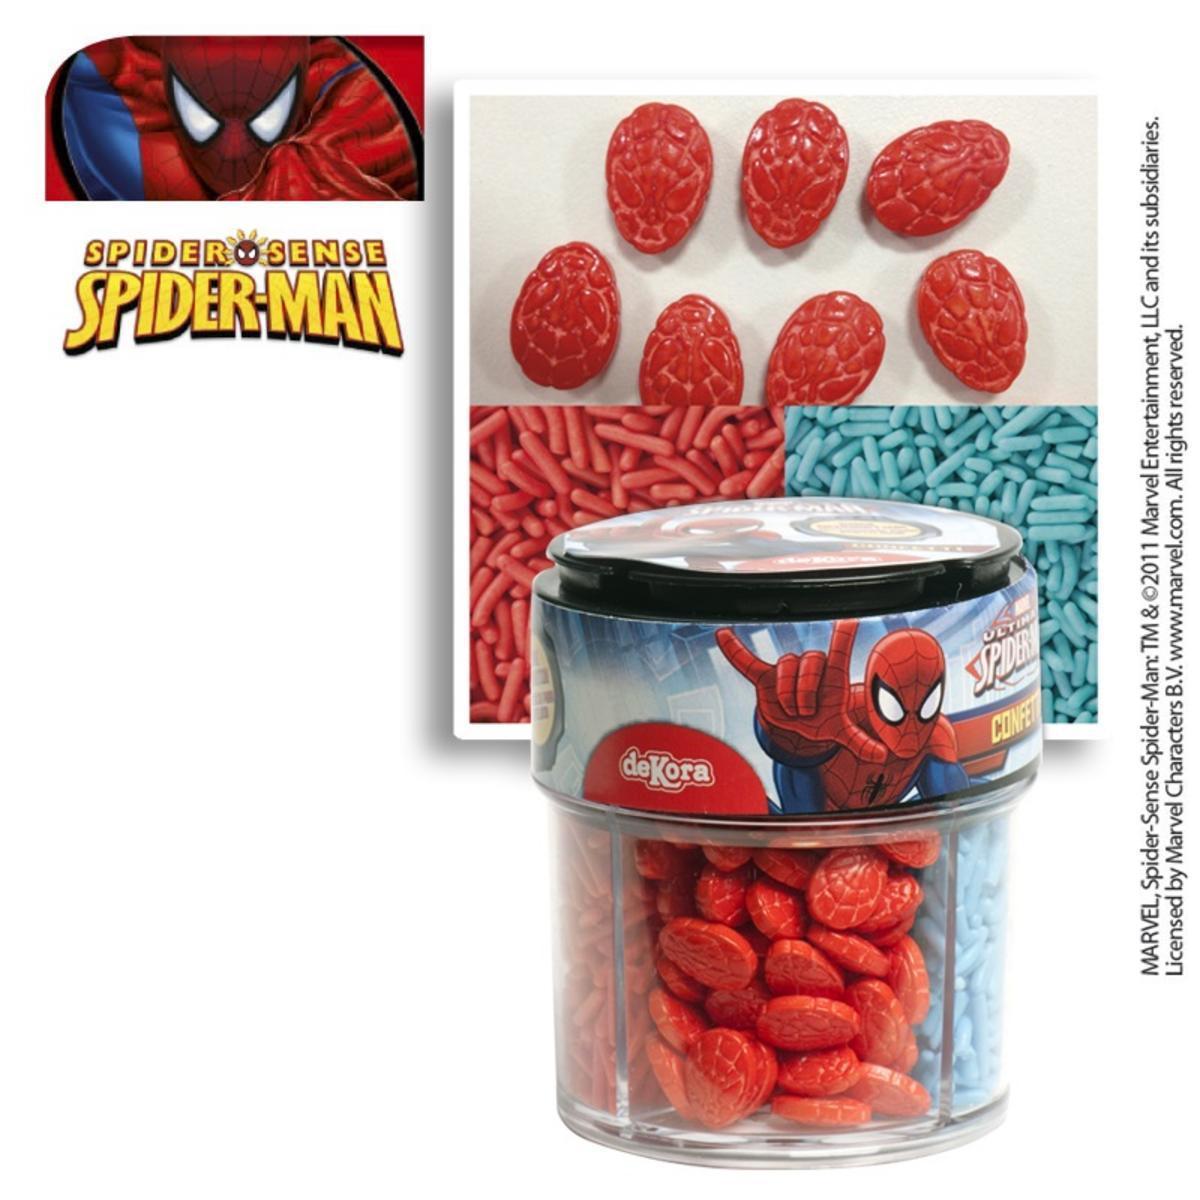 Décorations alimentaires Spider-man - Sucre - 88 g - Multicolore